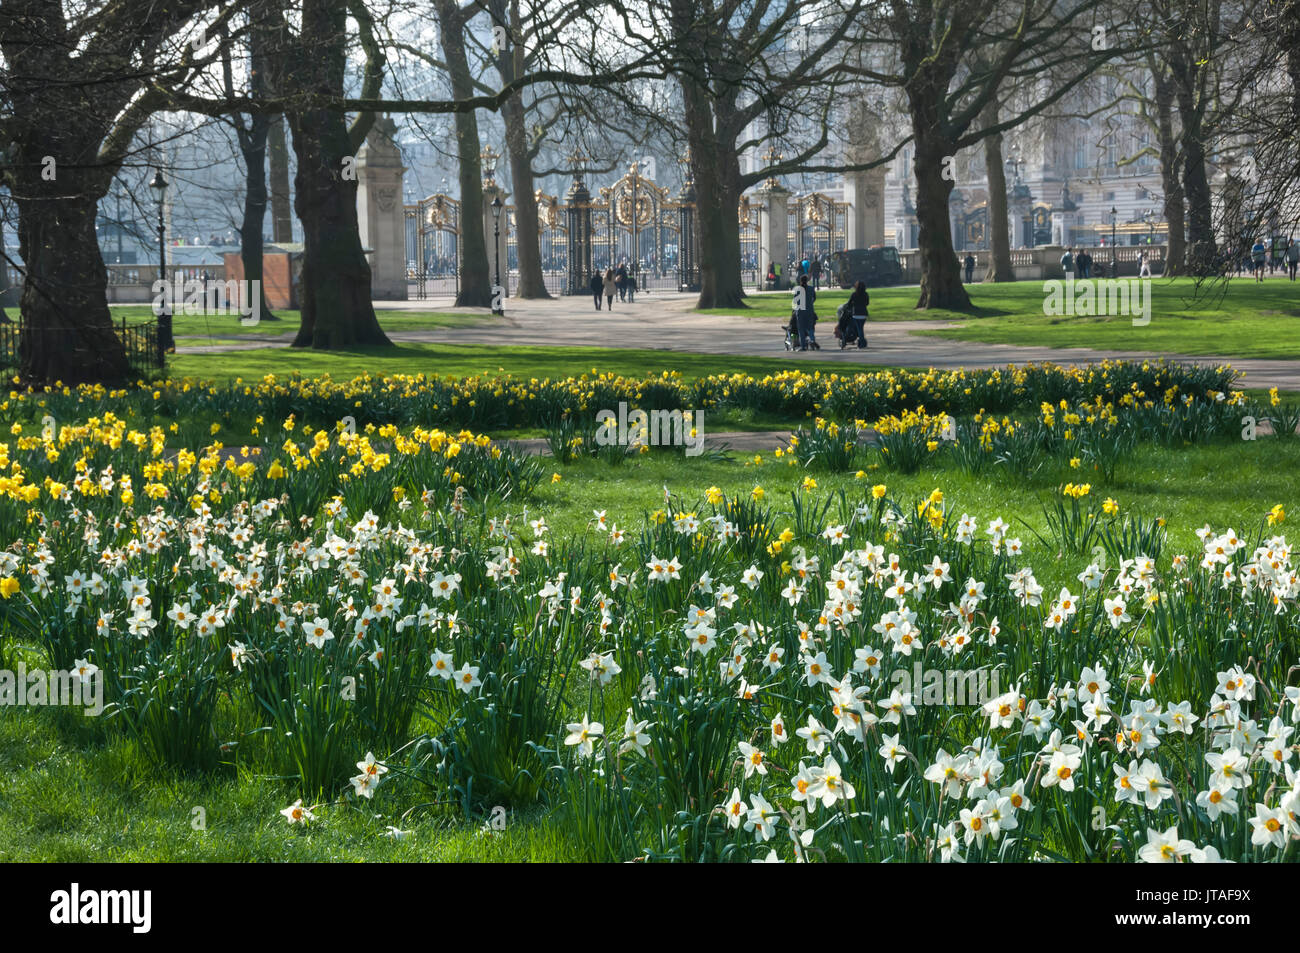 Daffodills and narcissus, Canada Gate to Buckingham Palace, Green Park, London, England, United Kingdom, Europe Stock Photo